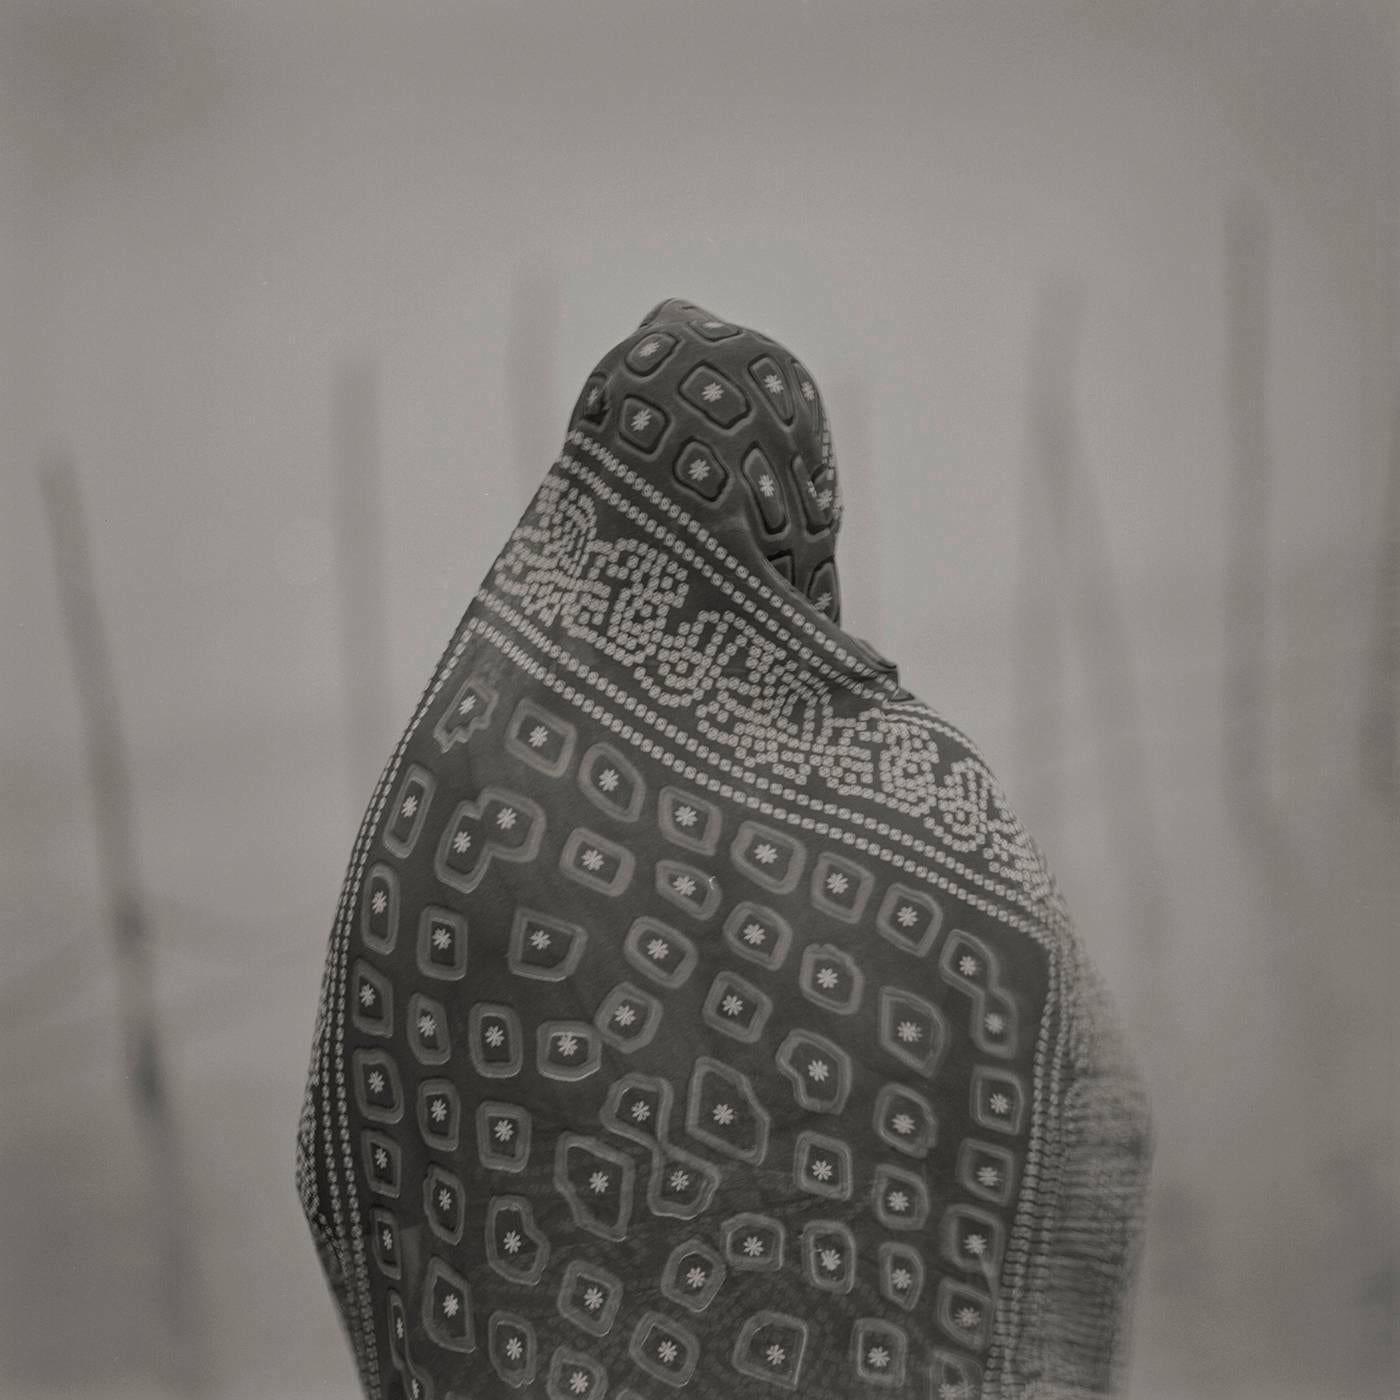 Kenro Izu Black and White Photograph - Eternal Light 147 #8, Allahabad, India